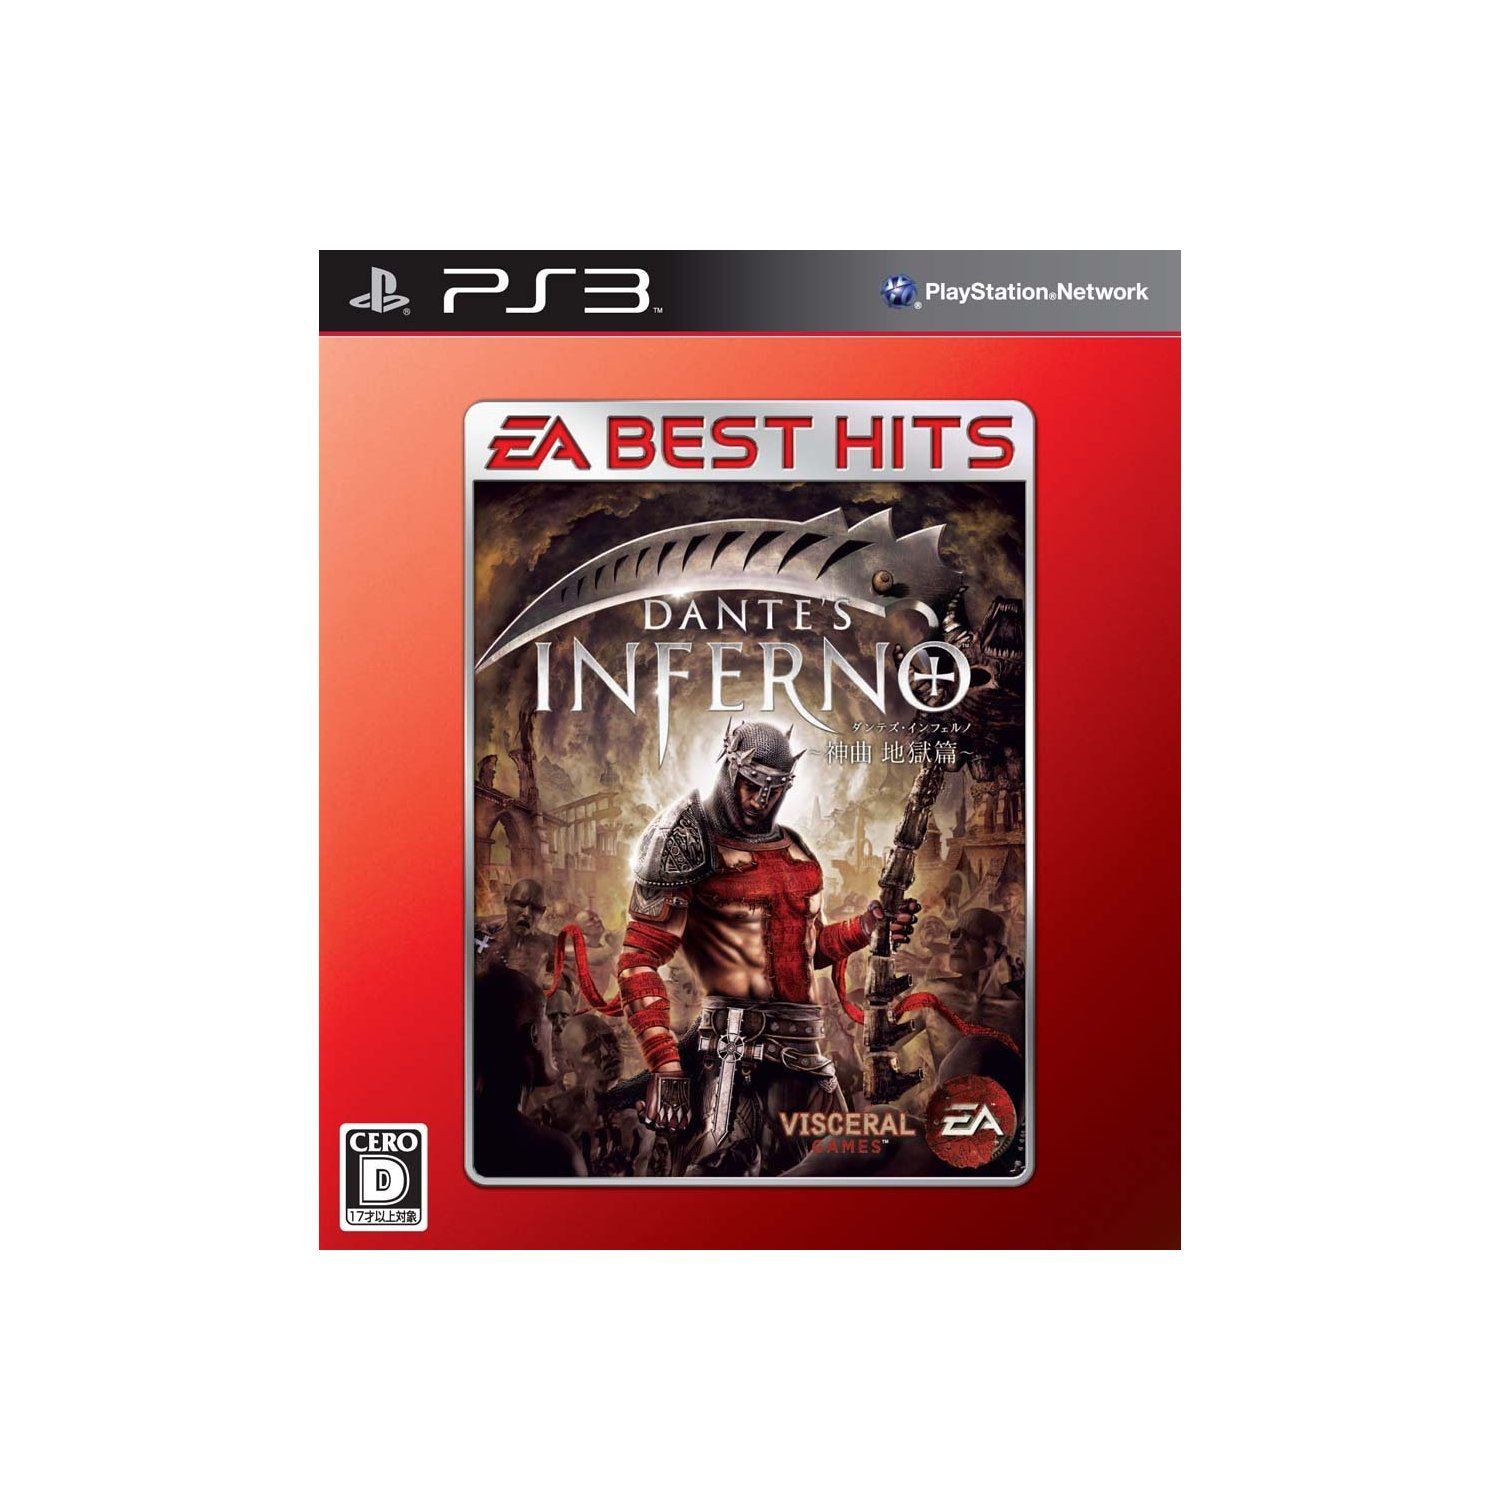 Dantes Inferno Divine Edition Playstation 3 Ps3